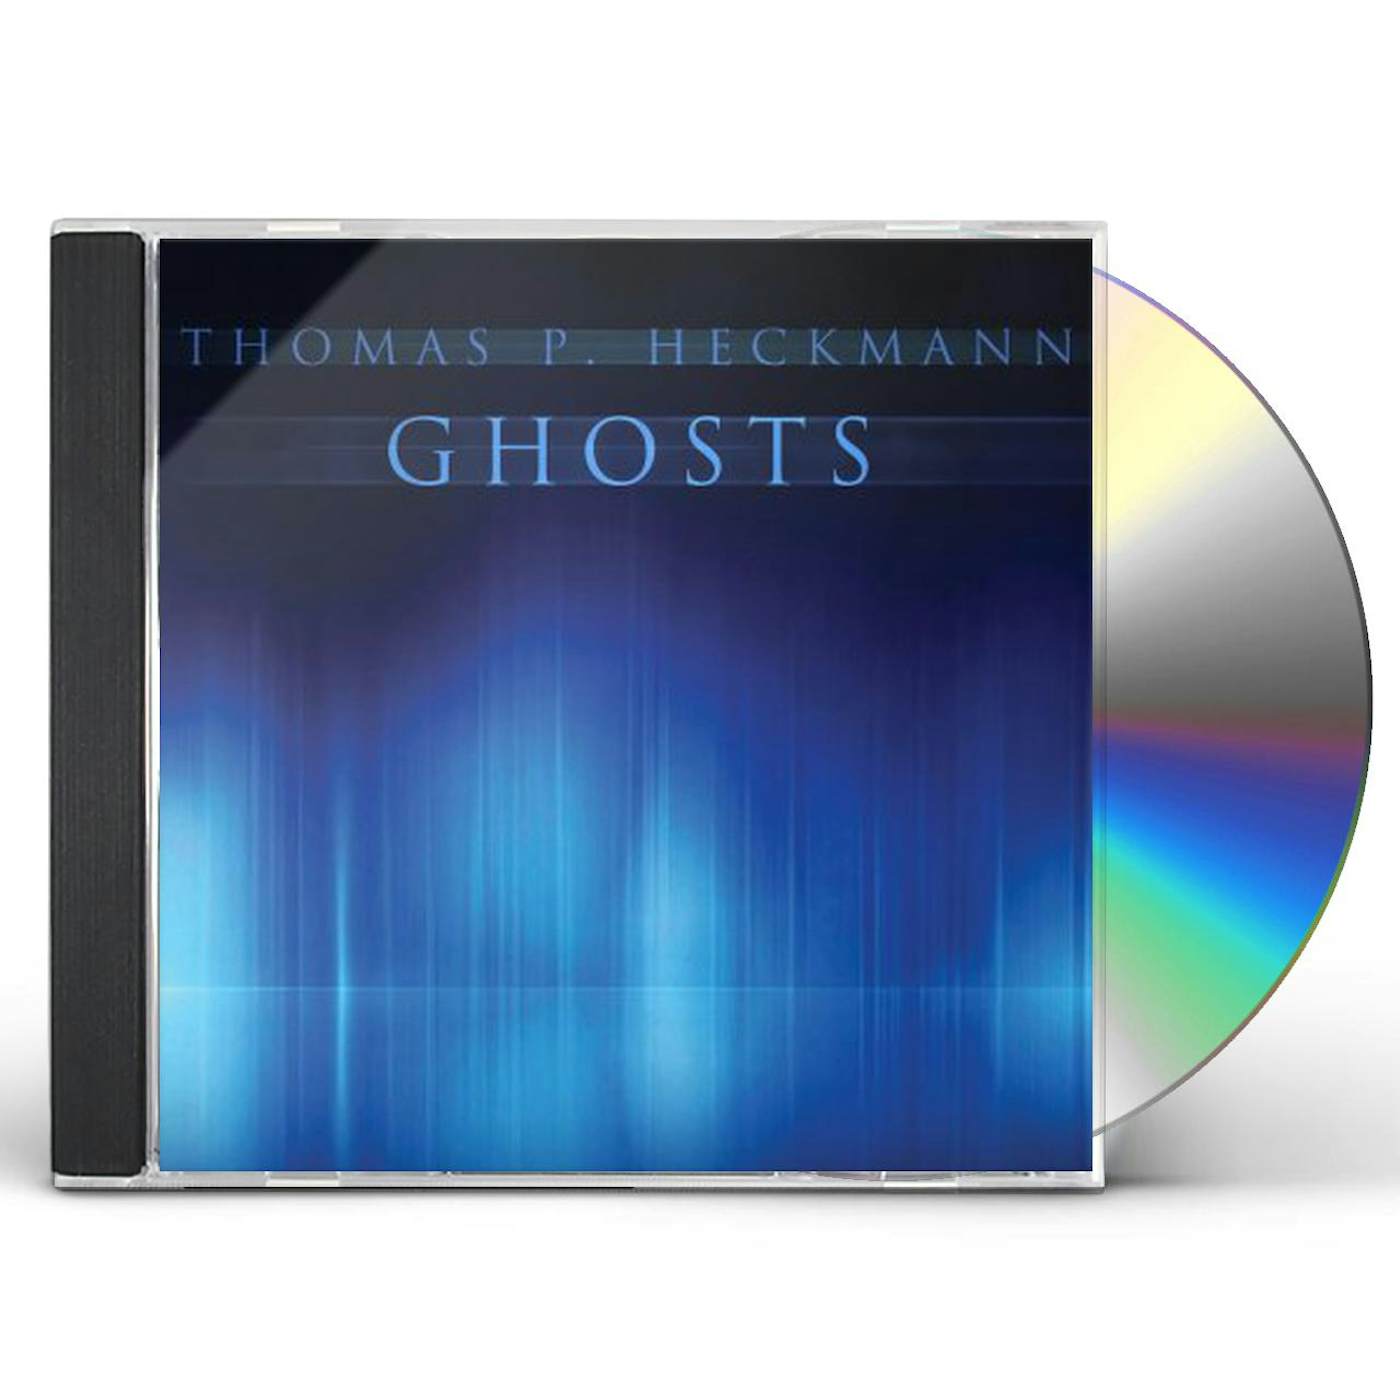 Thomas P. Heckmann GHOSTS CD